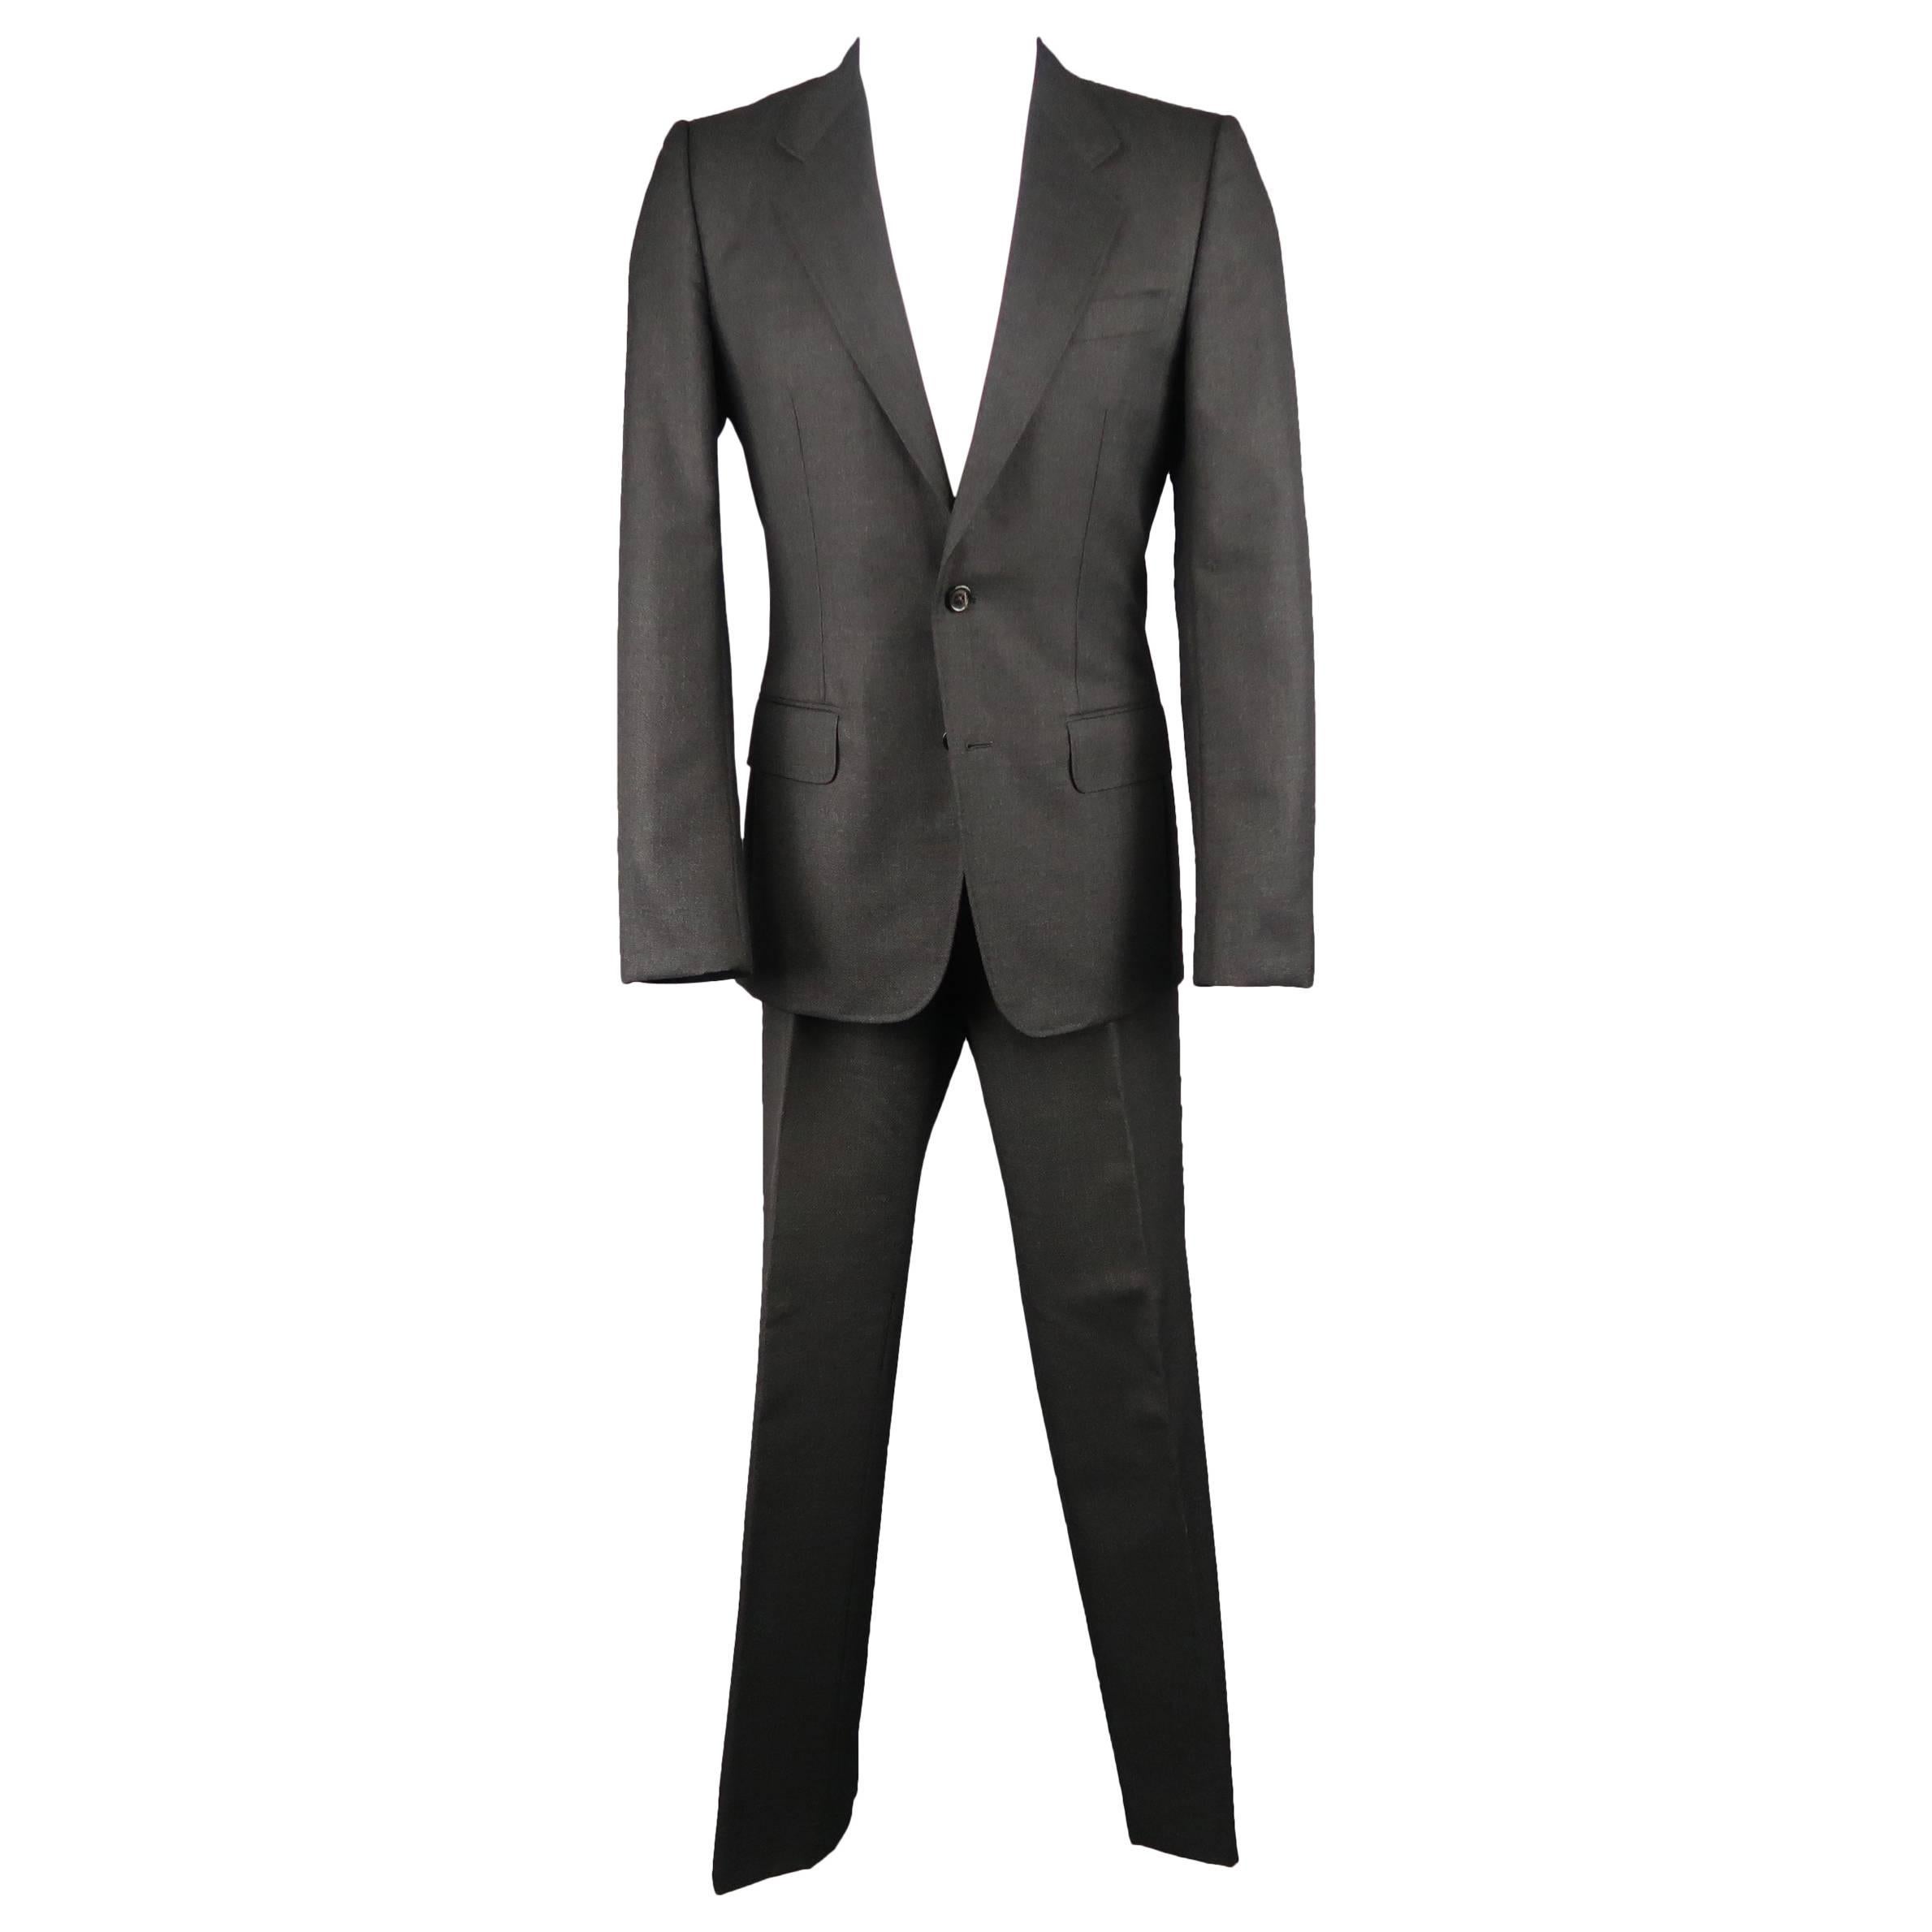 Yves Saint Laurent By Tom Ford Men's Charcoal Wool 2 Button Notch Lapel Suit